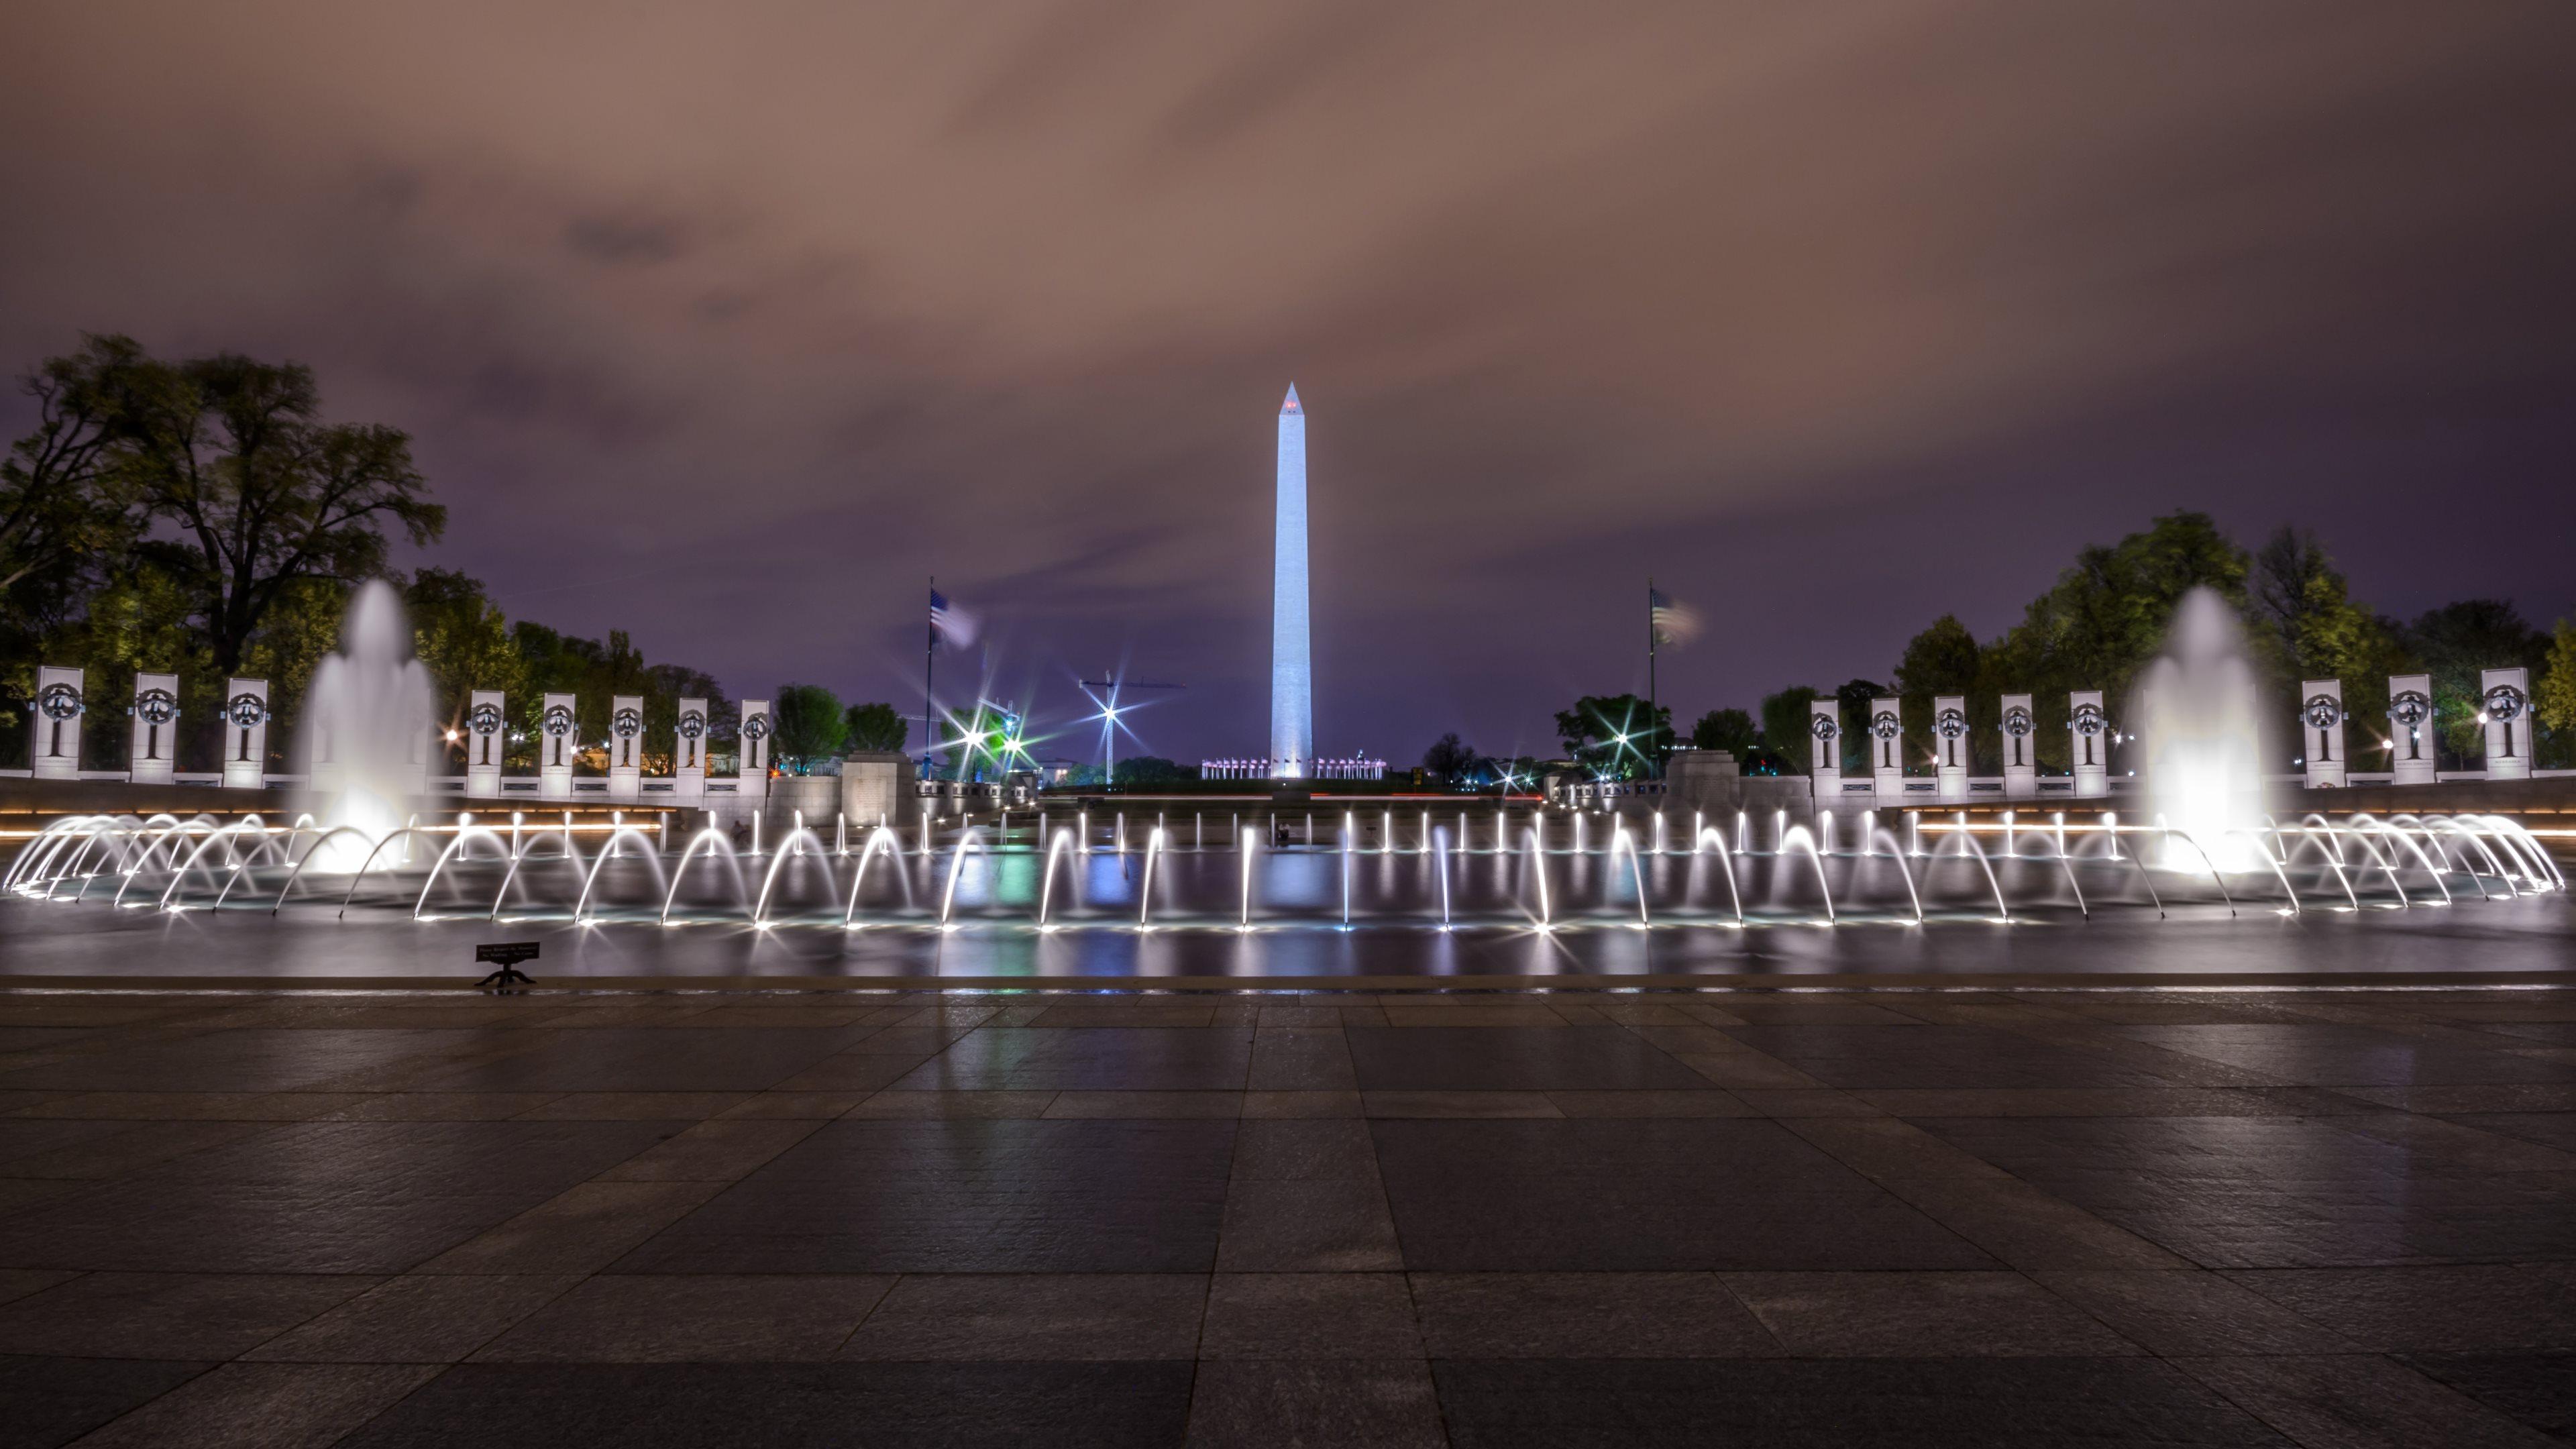 Washington Monument 4k Ultra HD Wallpaper. Background Image